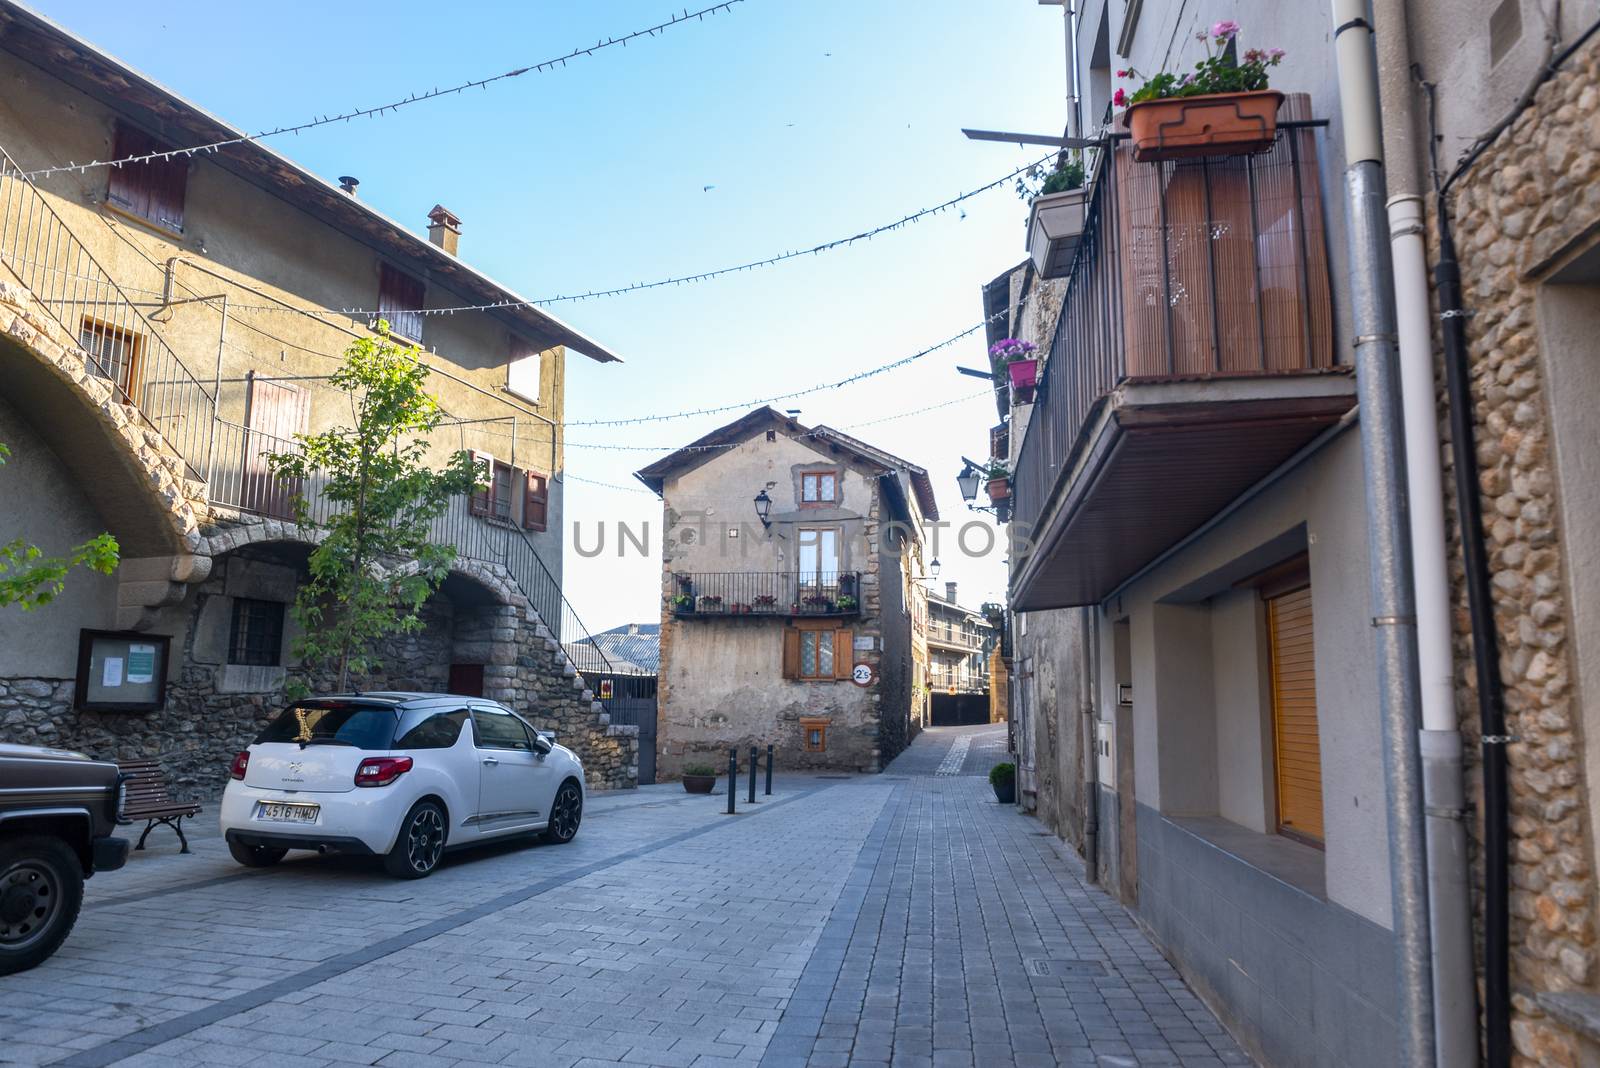 Alp, Spain : 2020 19 July : Major Street behind the Church of Parròquia de Sant Pere in Summer. Alp, Spain  on July 2020.